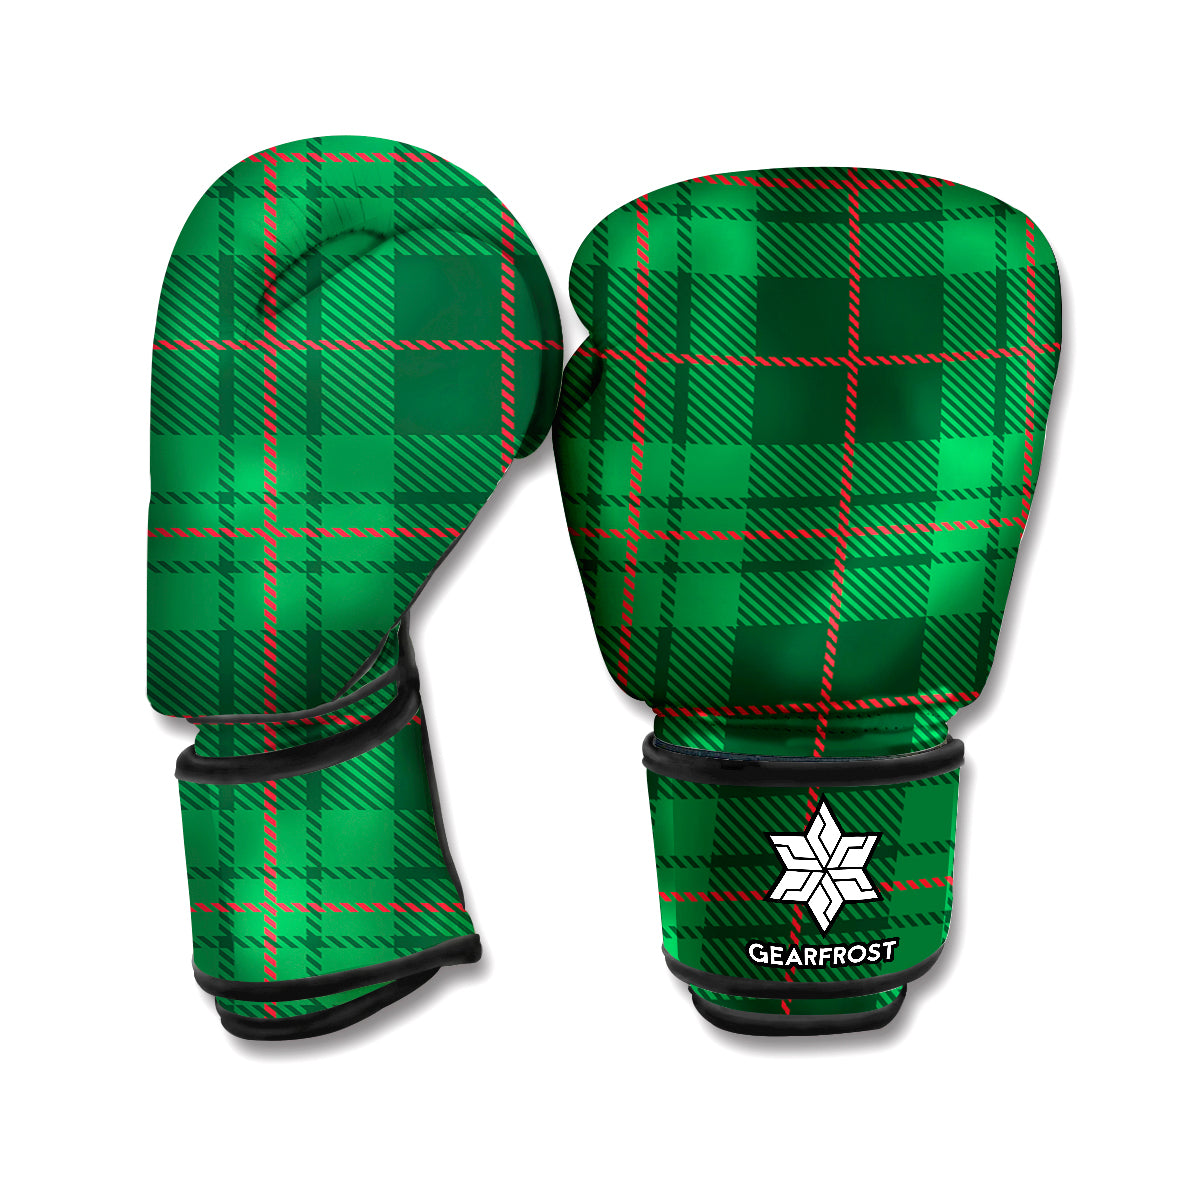 Green And Red Stewart Tartan Print Boxing Gloves